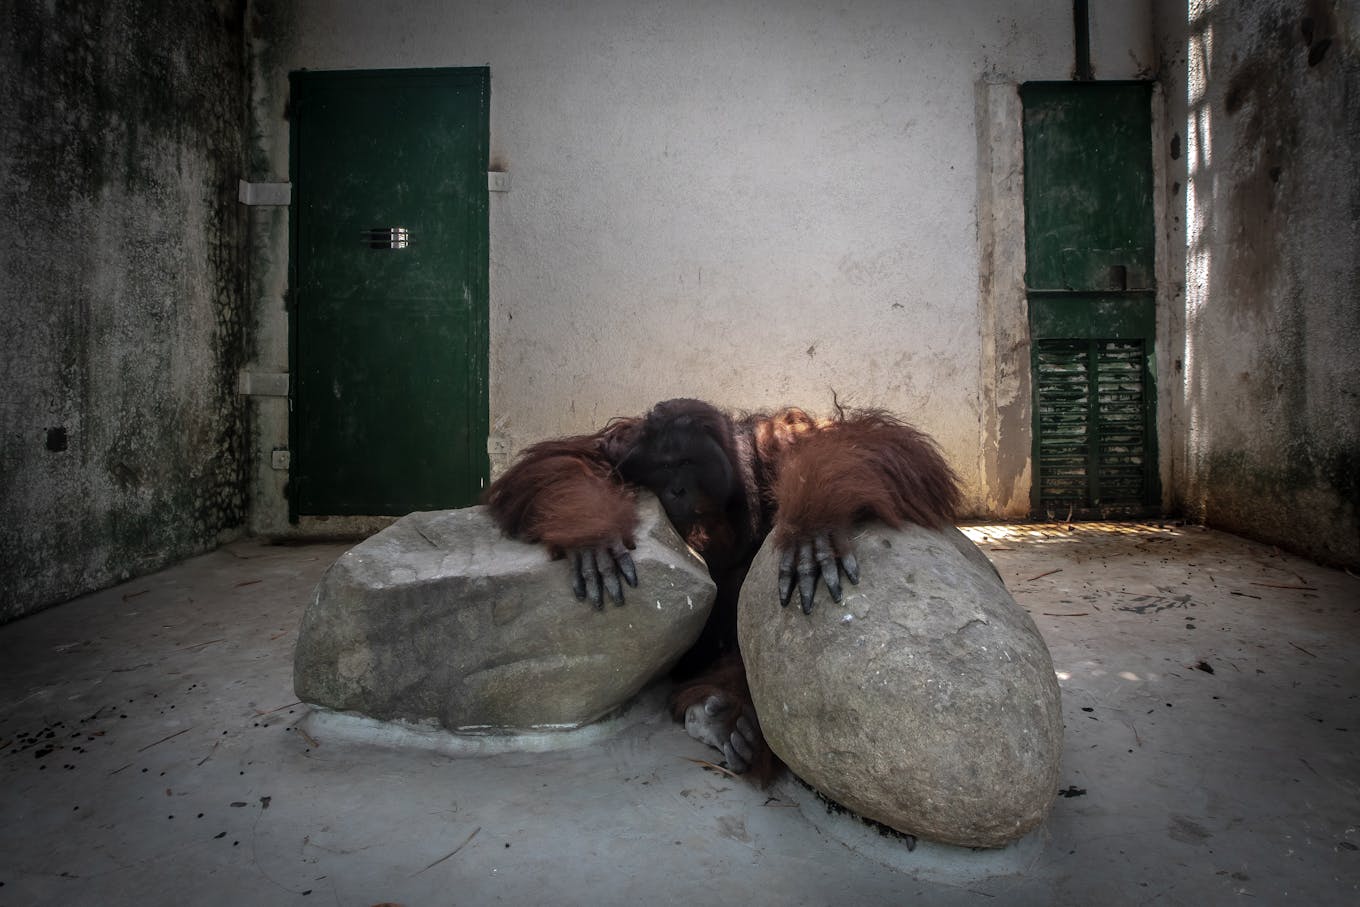 Orangutan hiding being blocks in small enclosure in Vietnam